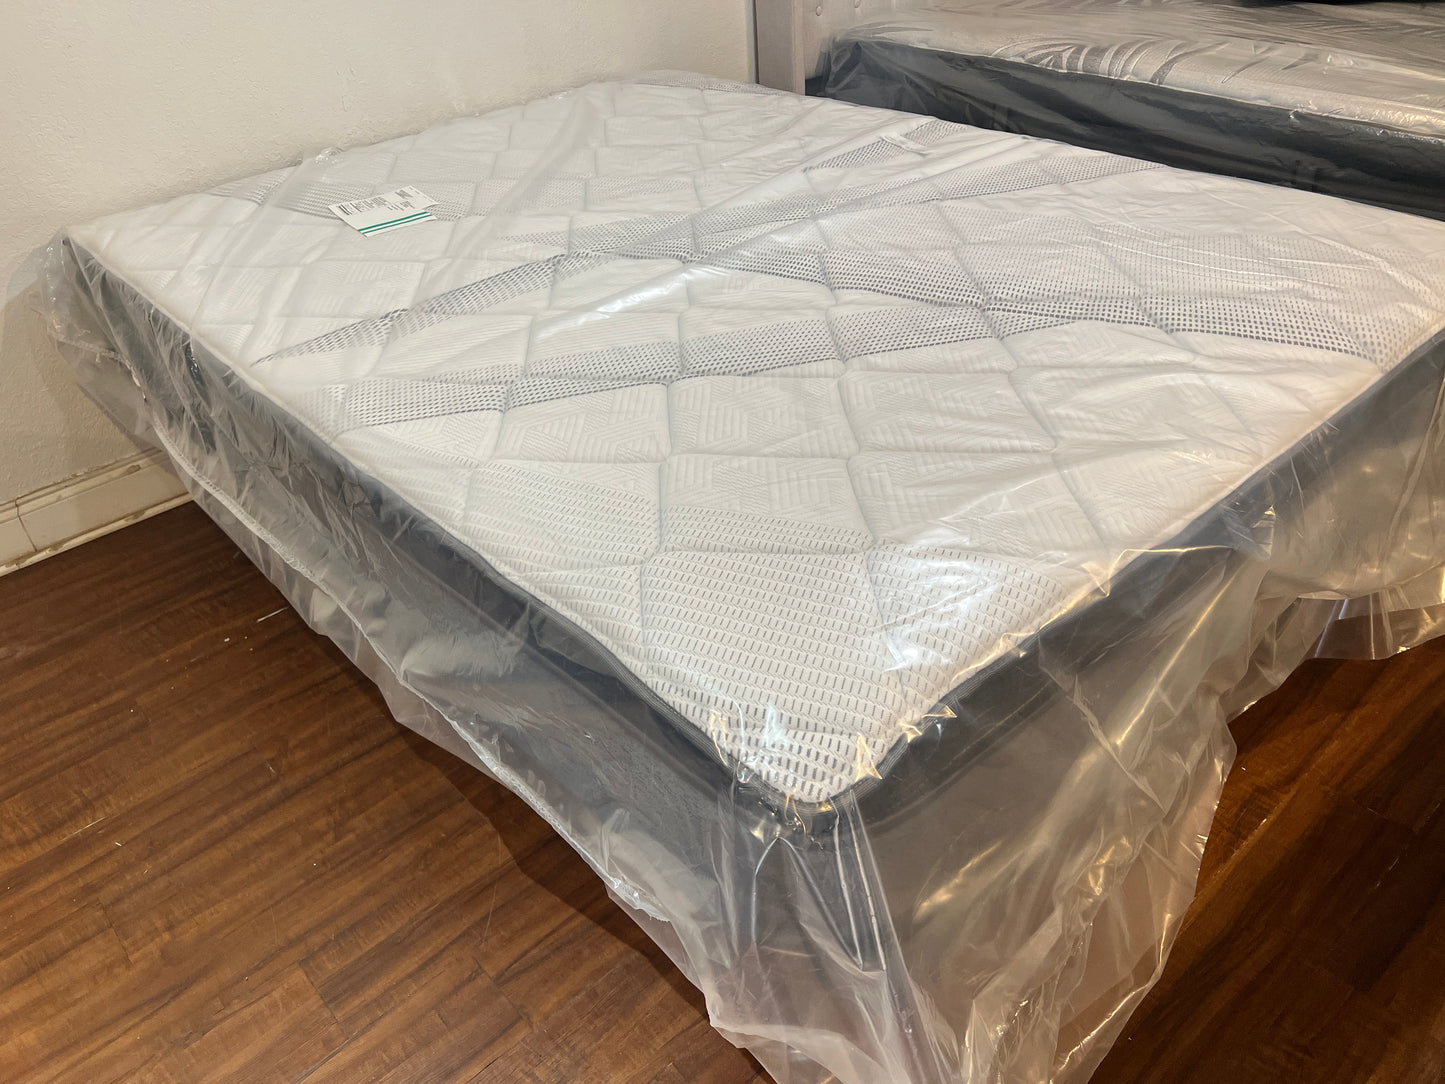 Brand new Jamison Verdi Square queen pillow-top mattress